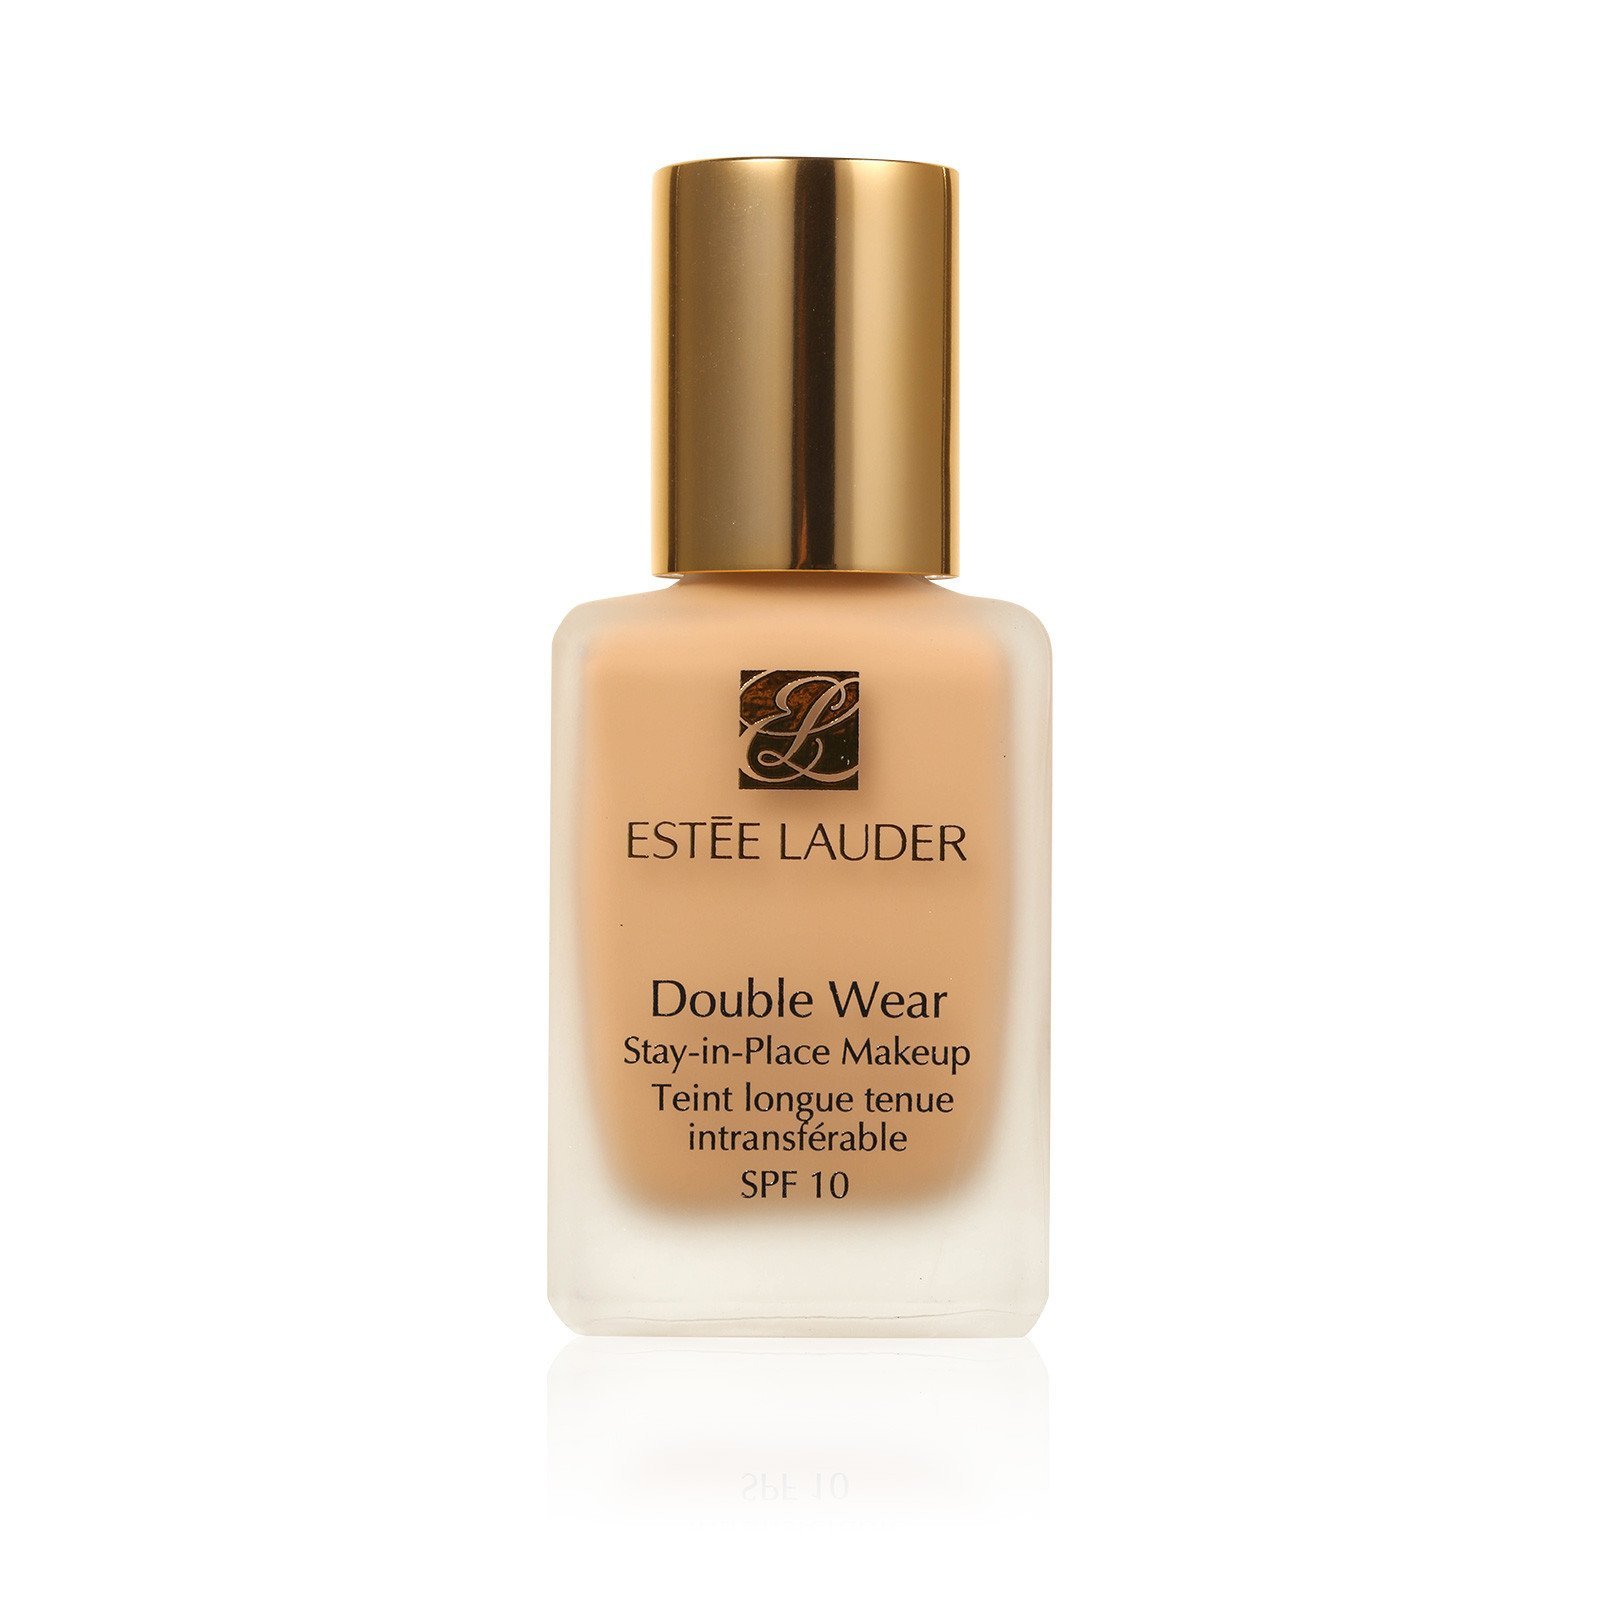 Estee Lauder Double Wear Stay-in-Place Makeup SPF 10 30ml #1W2 Sand - $49.99